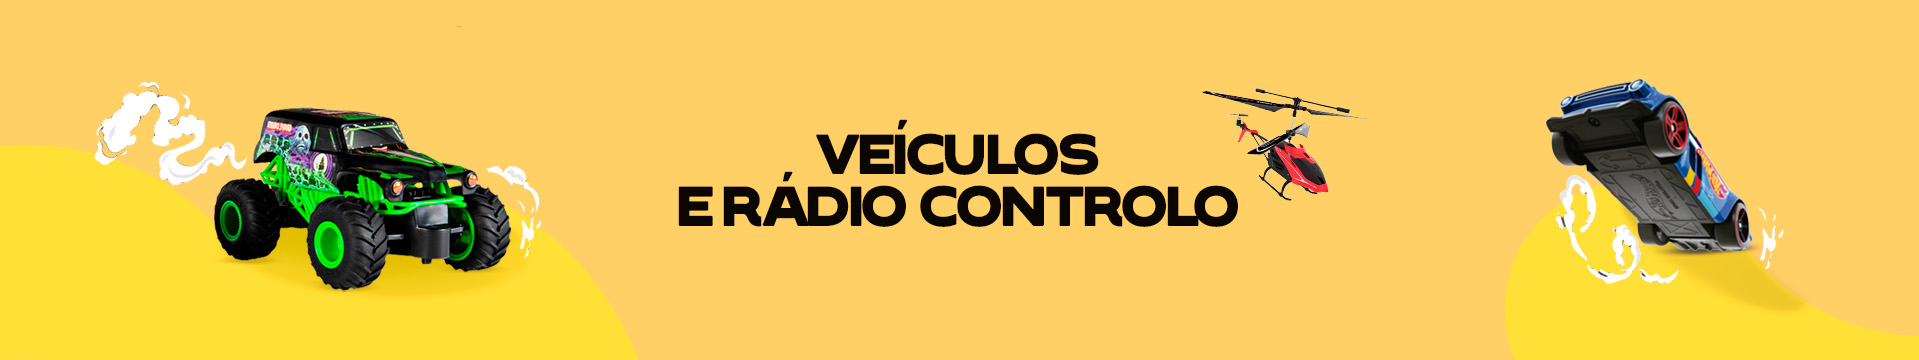 Veículos e Rádio Controlo